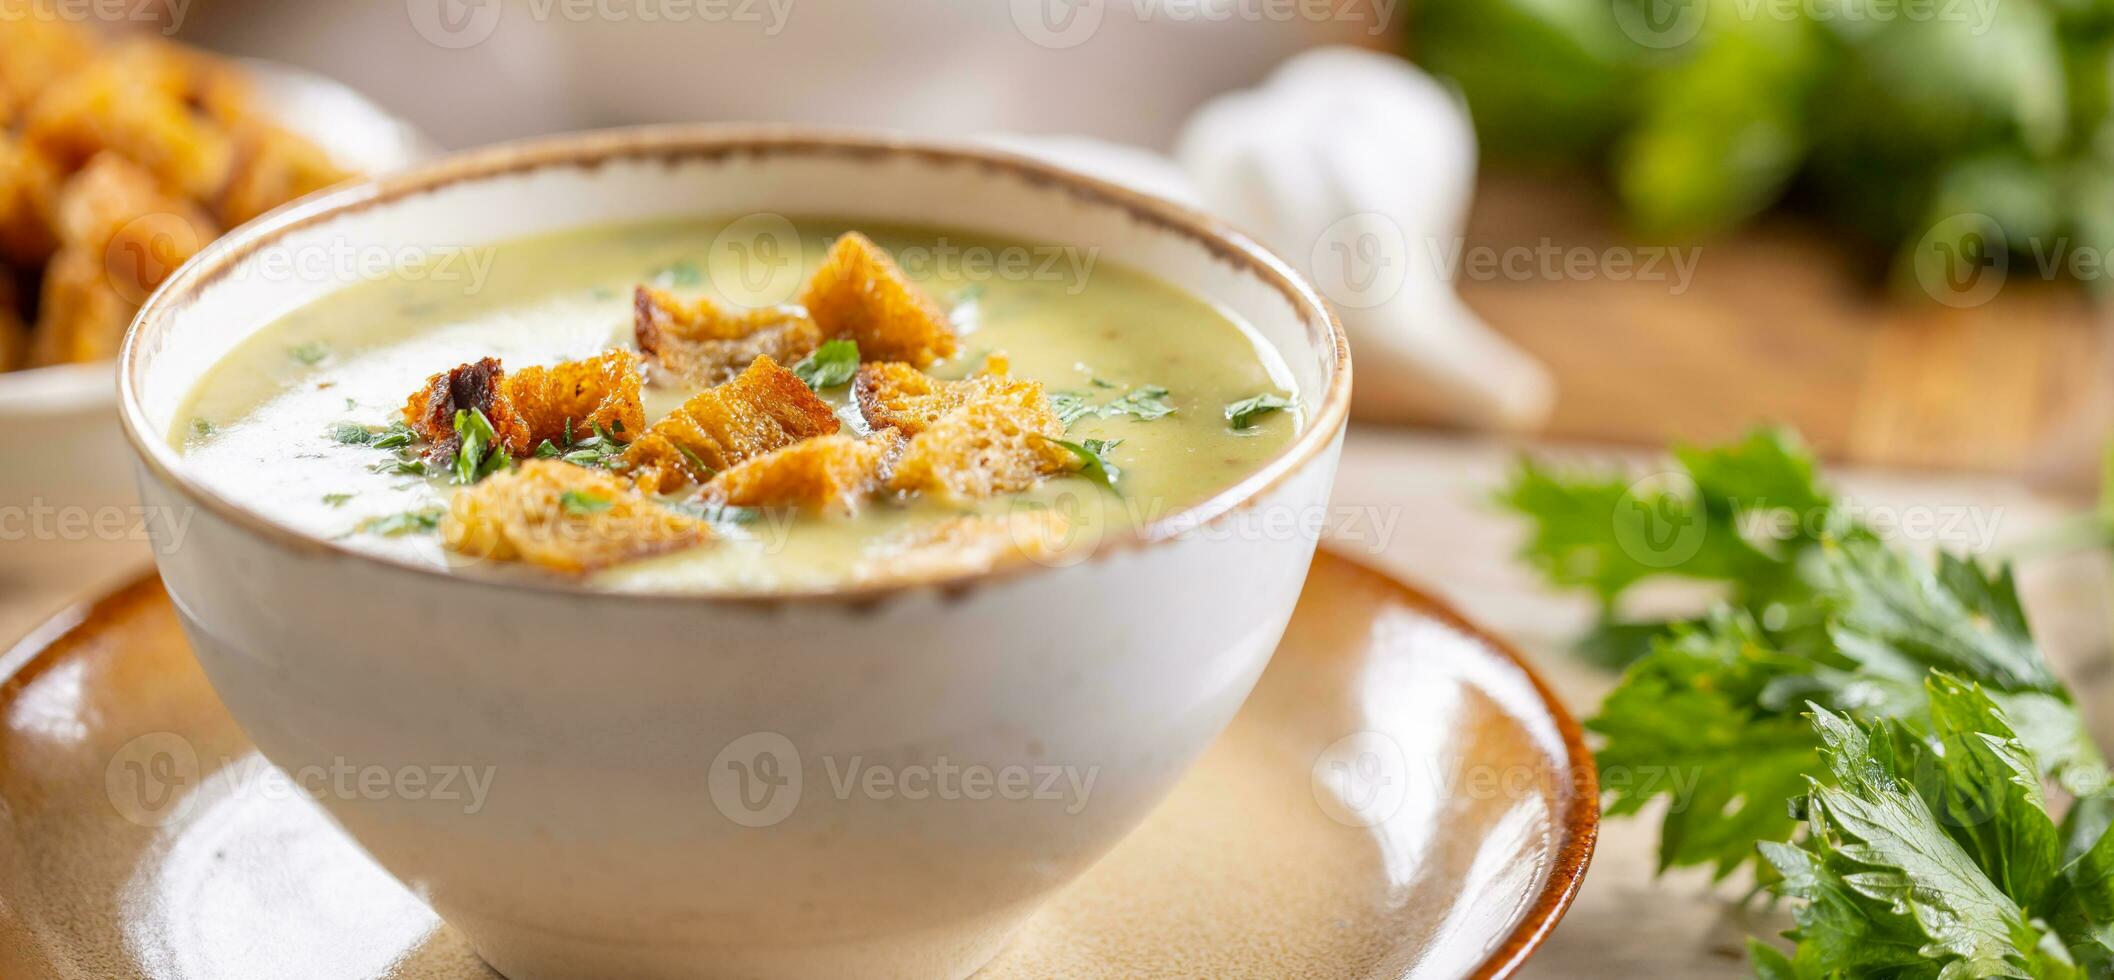 Knoblauch Sahne Suppe mit Brot Croutons im rustikal Schüssel foto